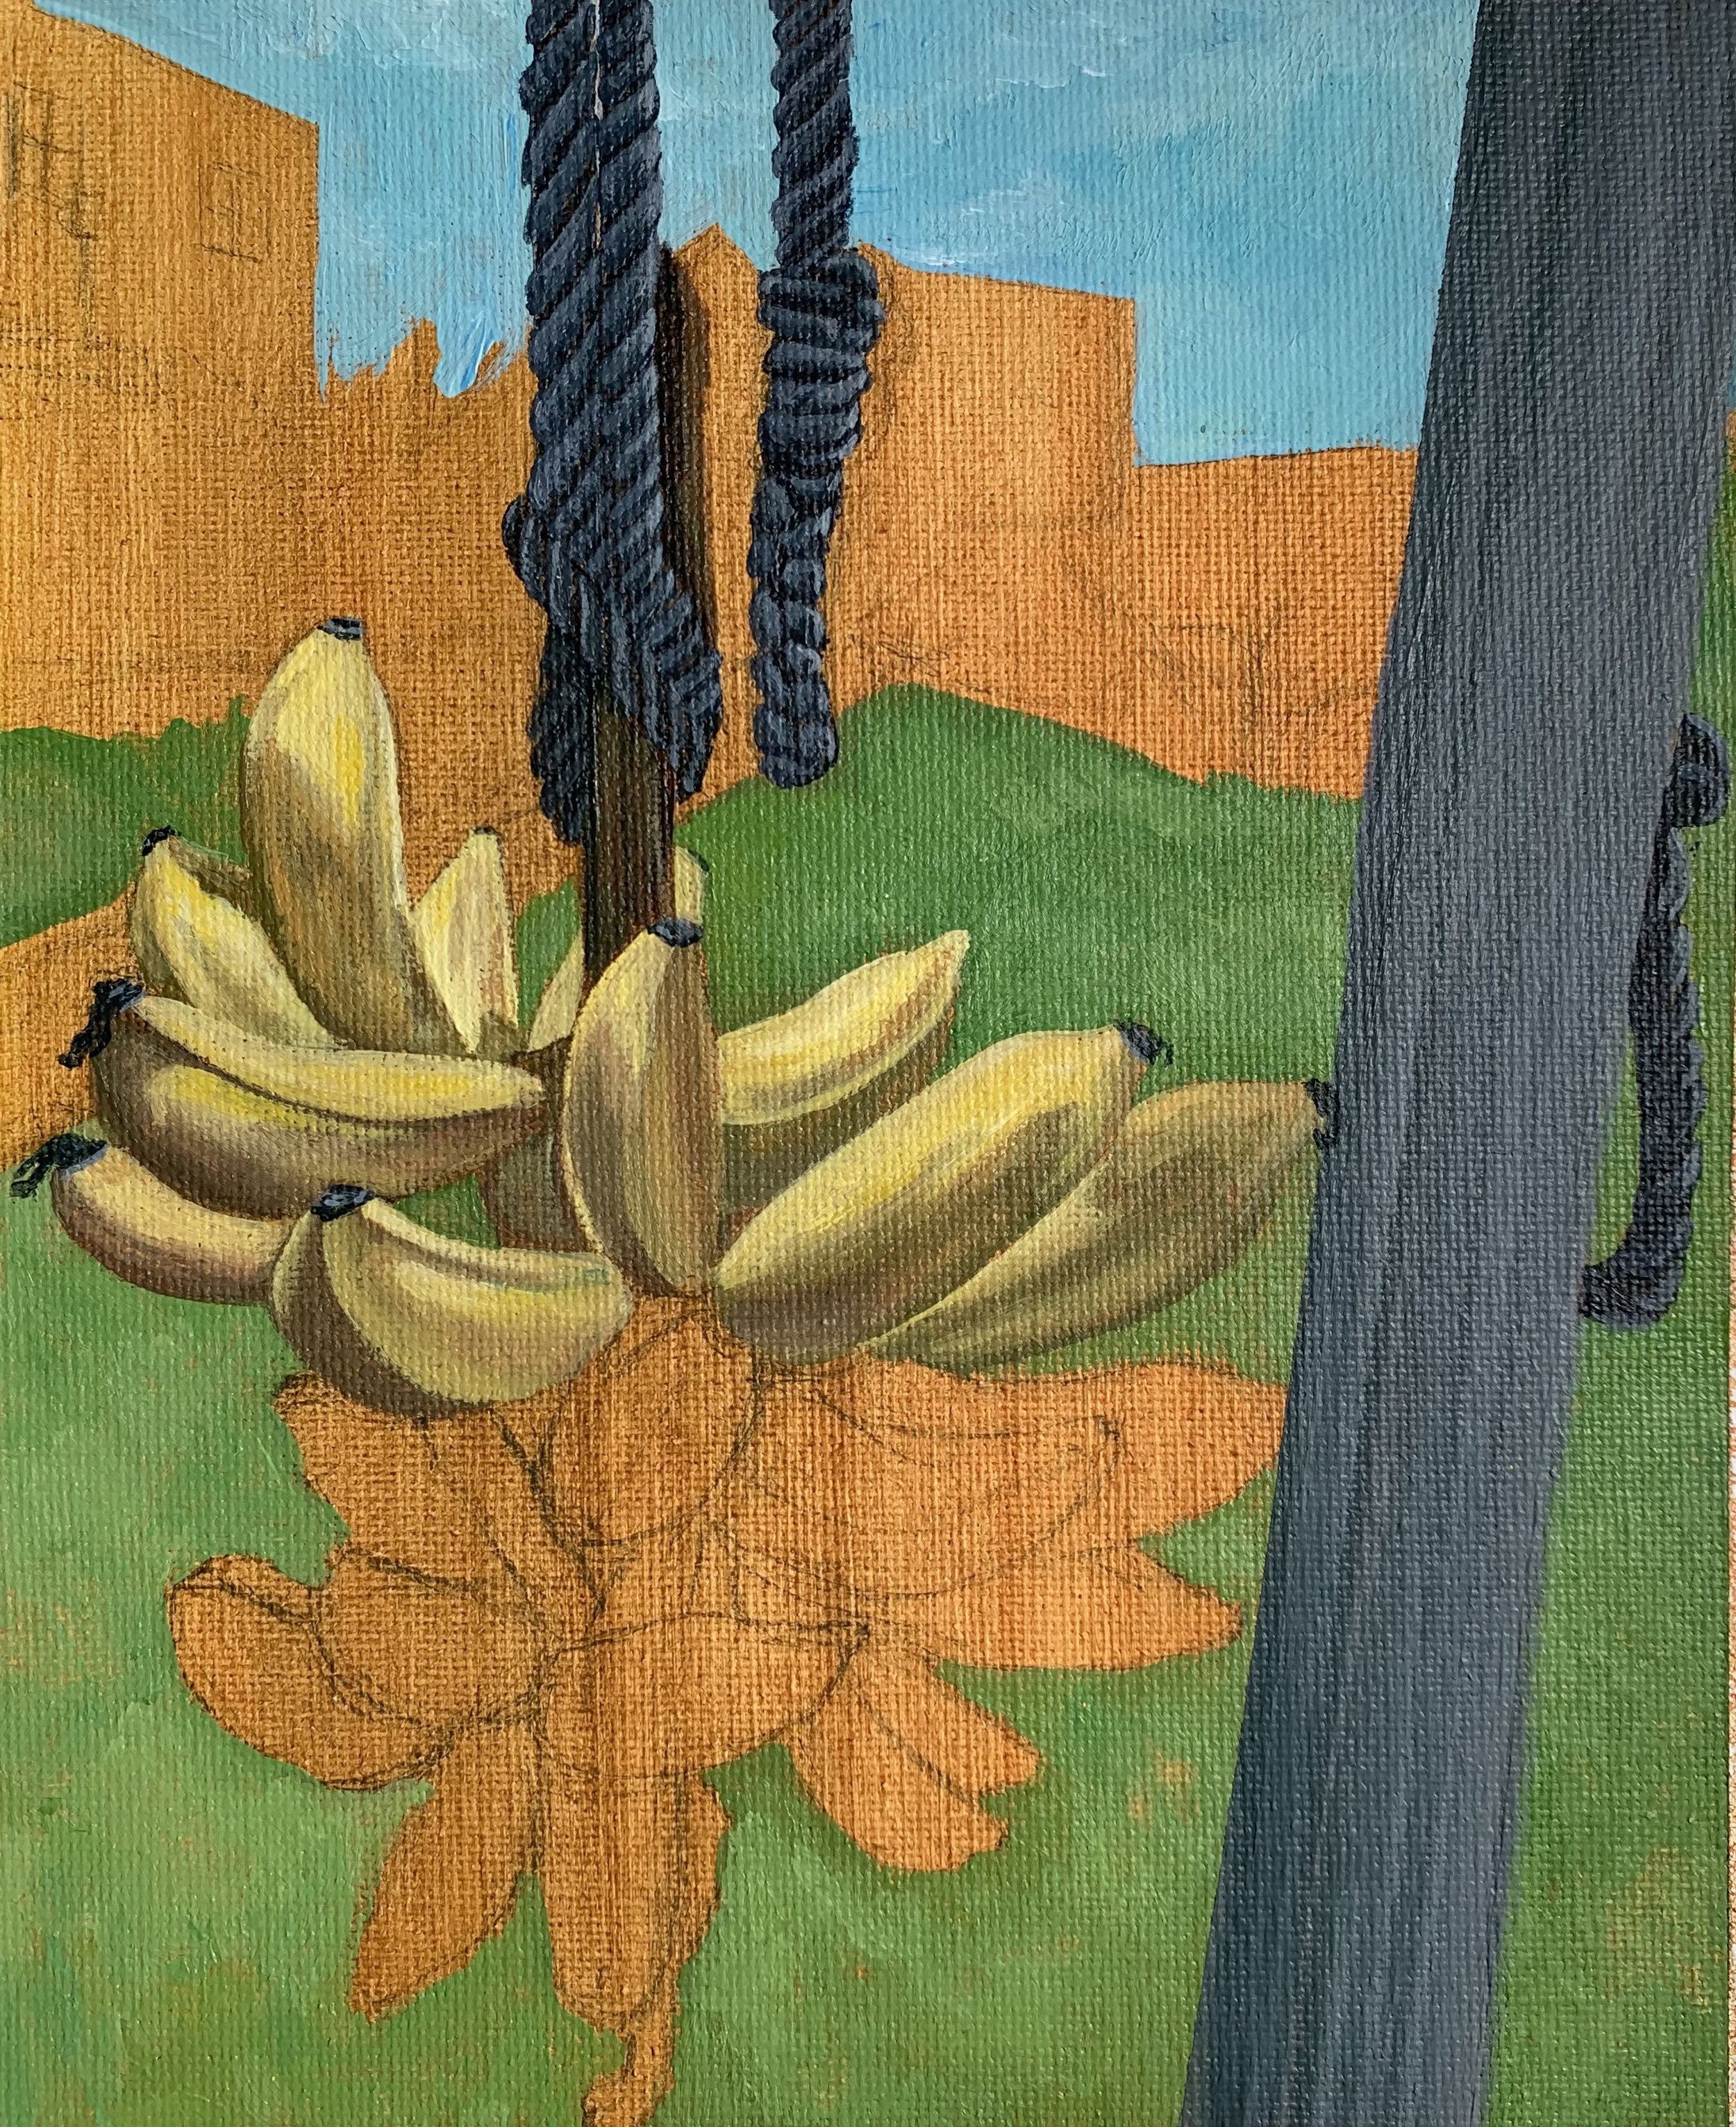 Hanging Bananas Study (2023)